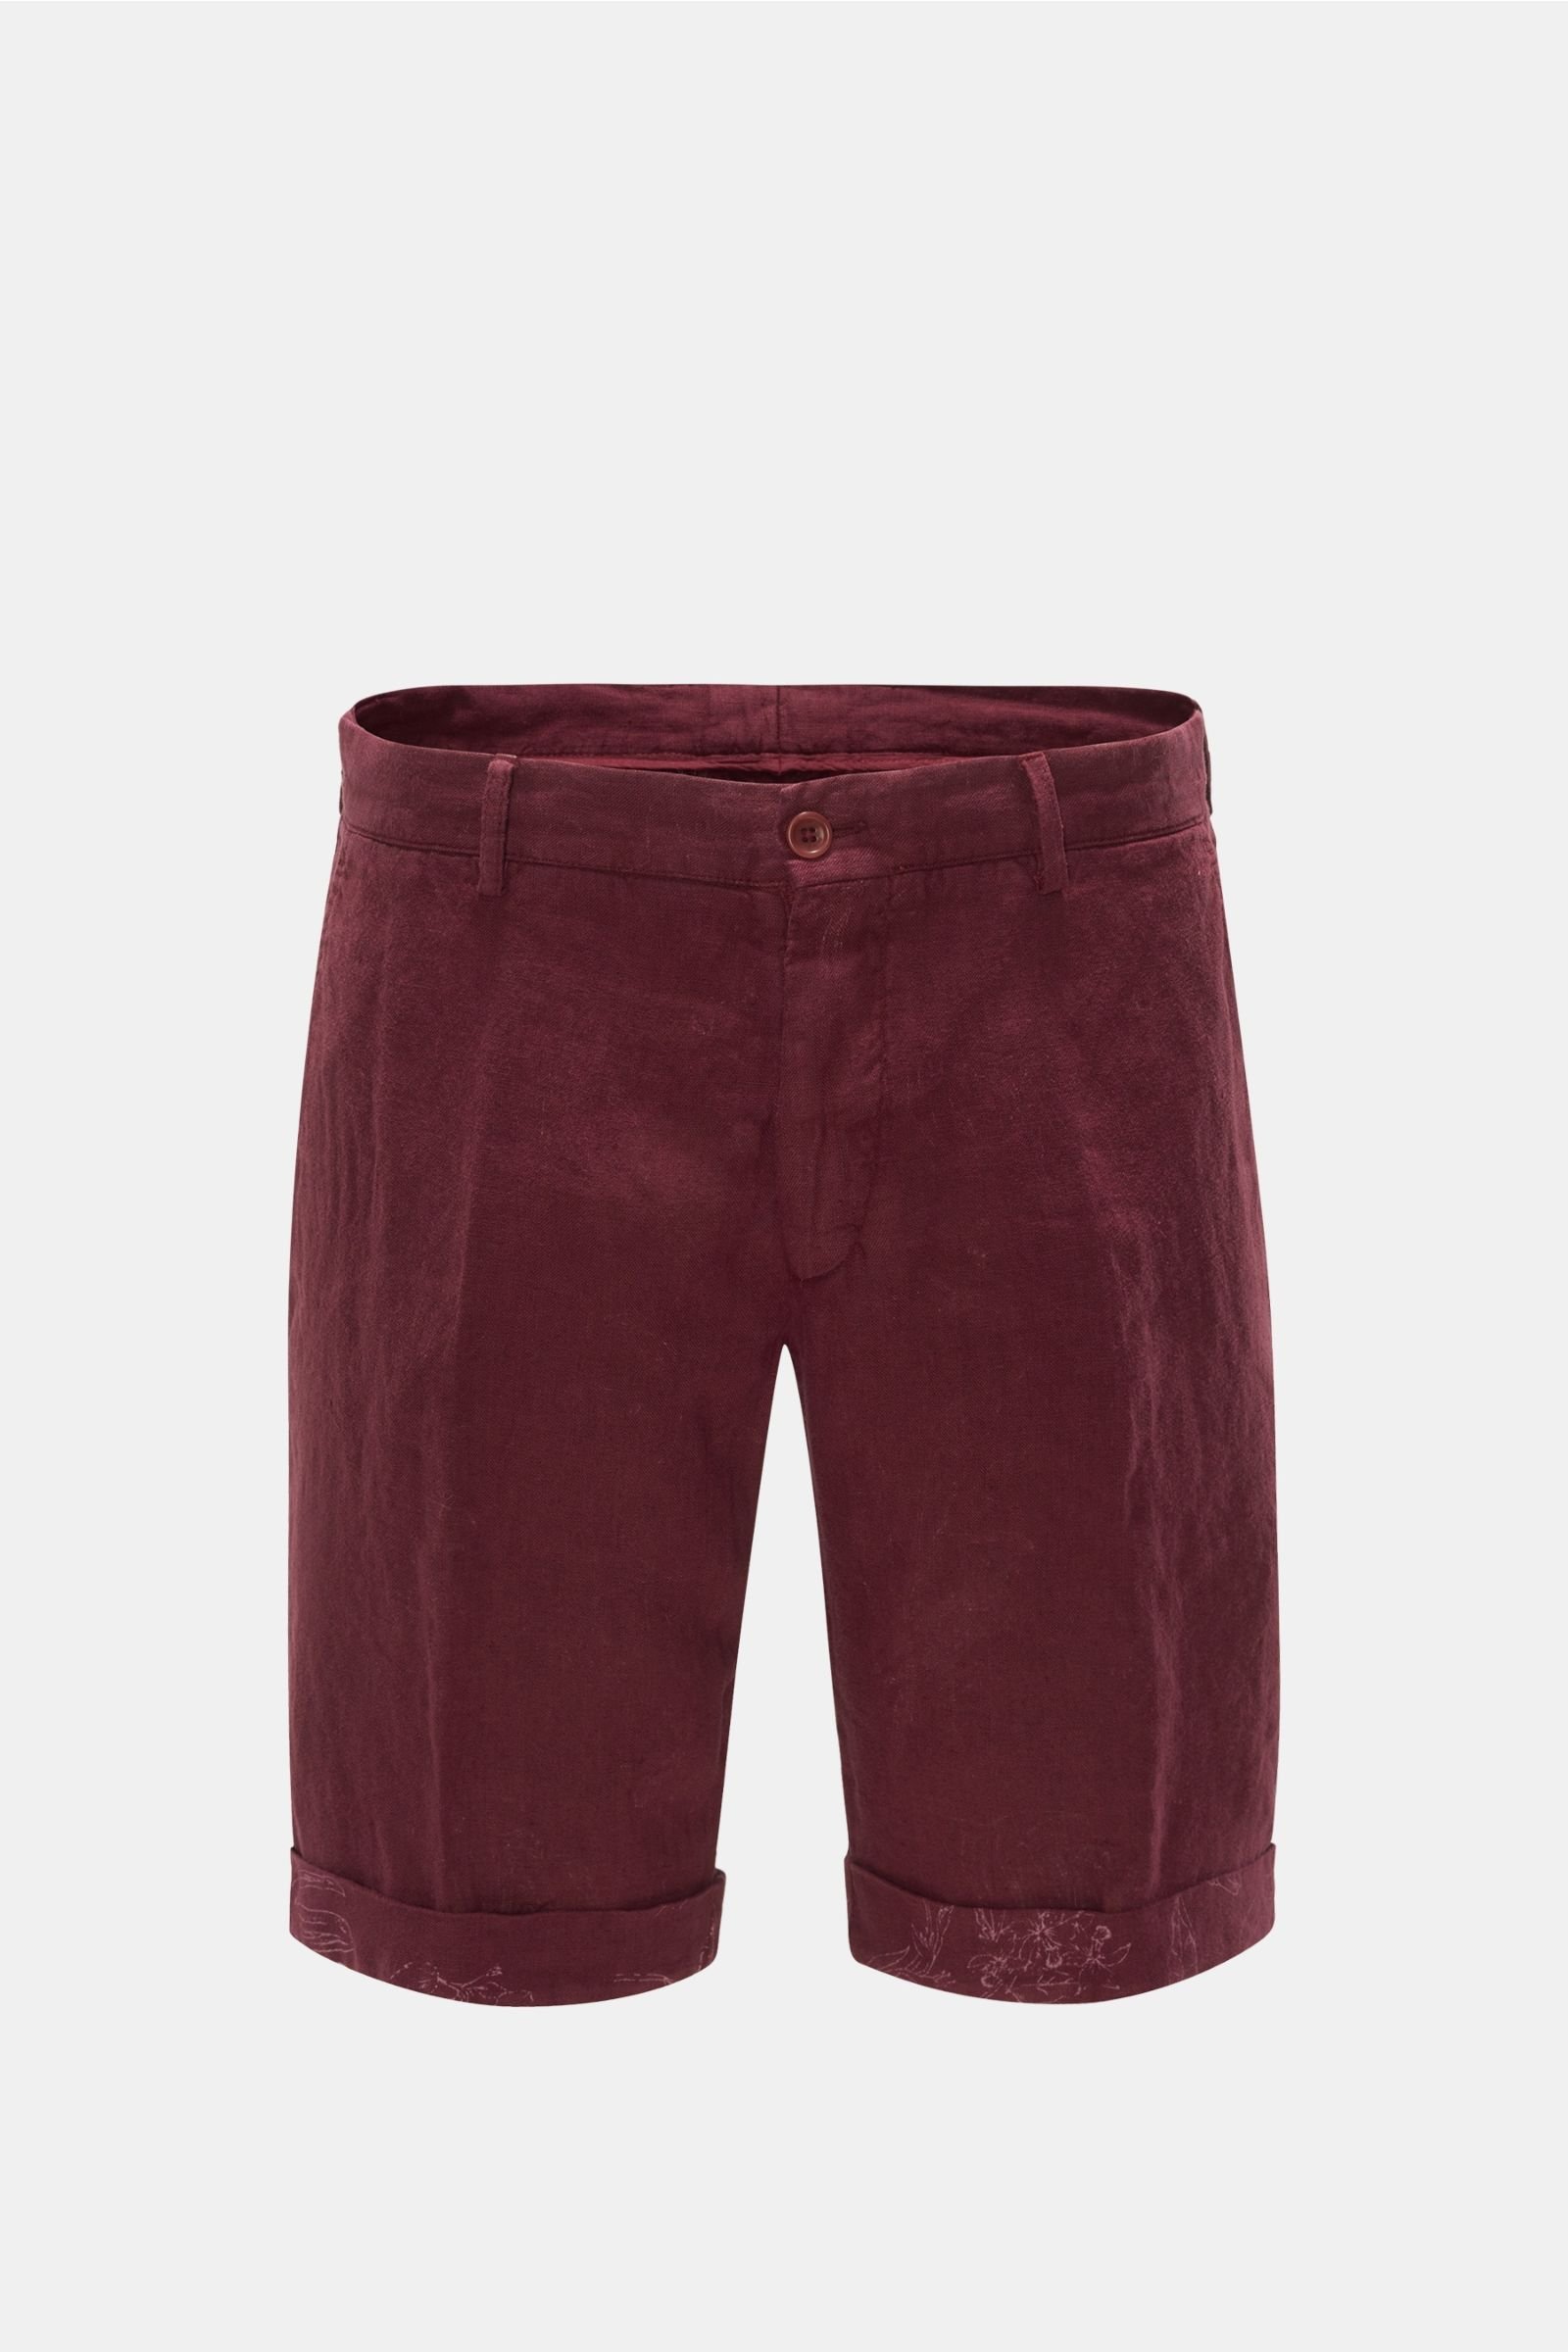 Linen Bermuda shorts burgundy